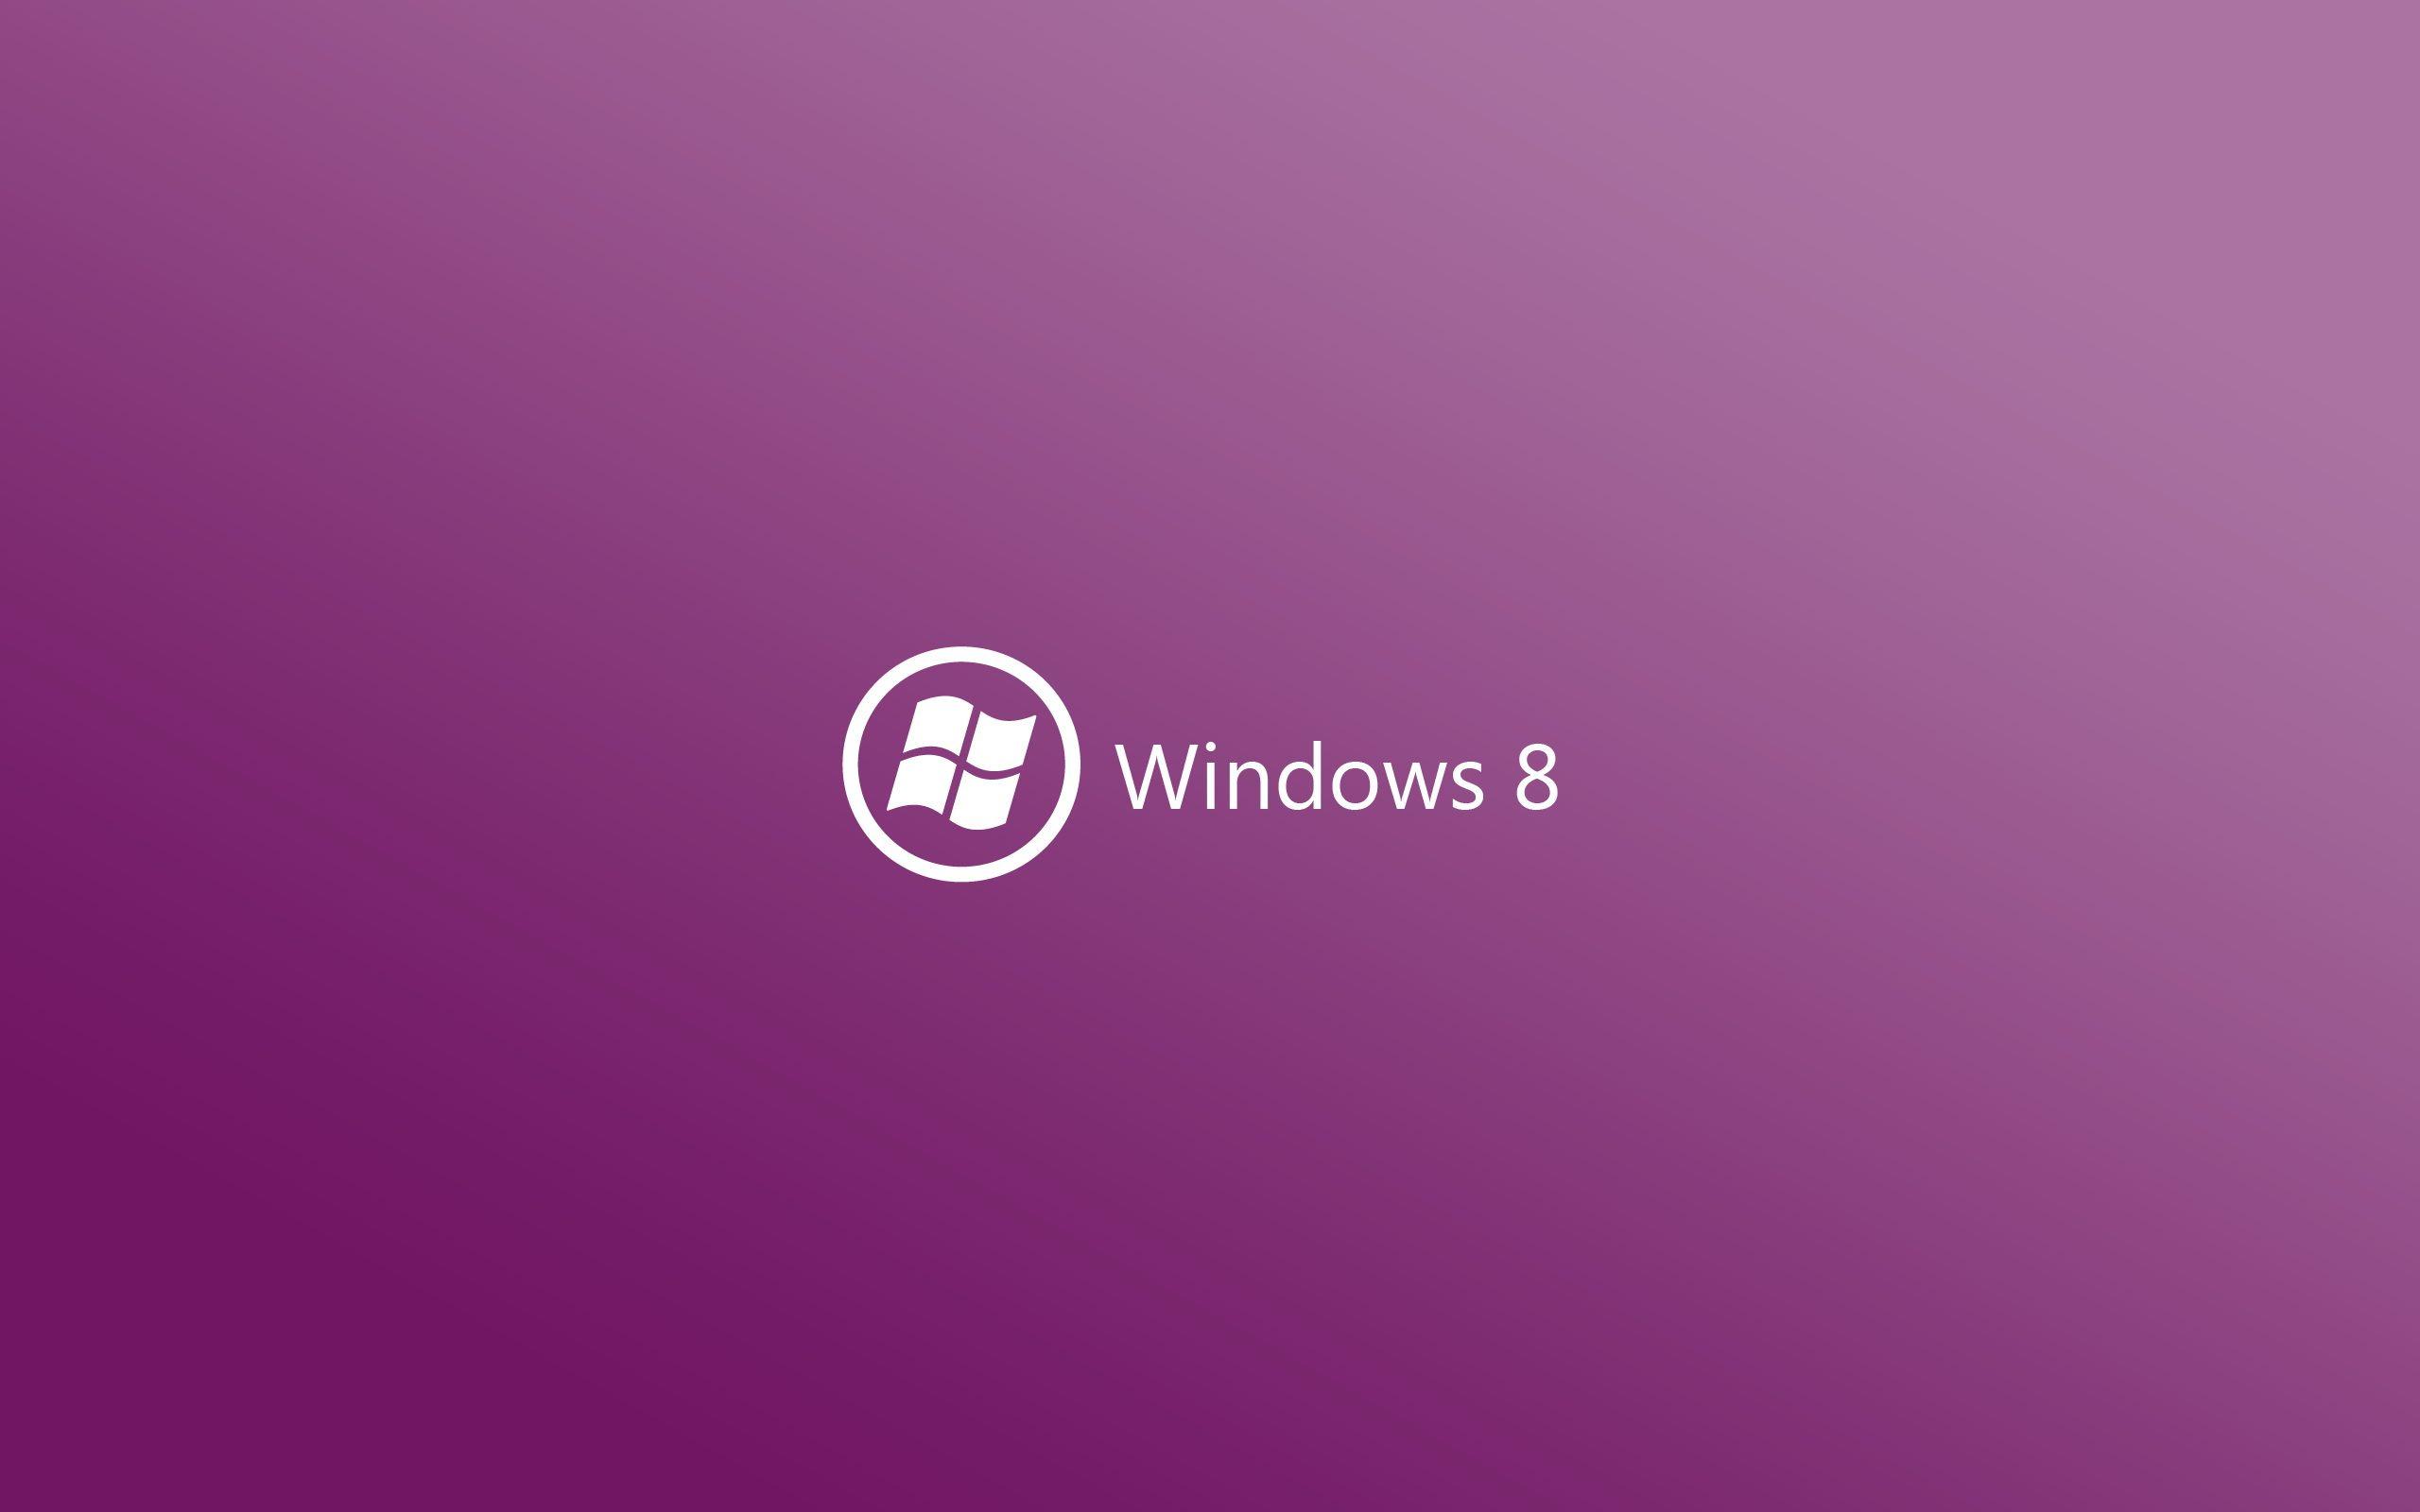 Windows 8.1 Wallpaper, Picture, Image